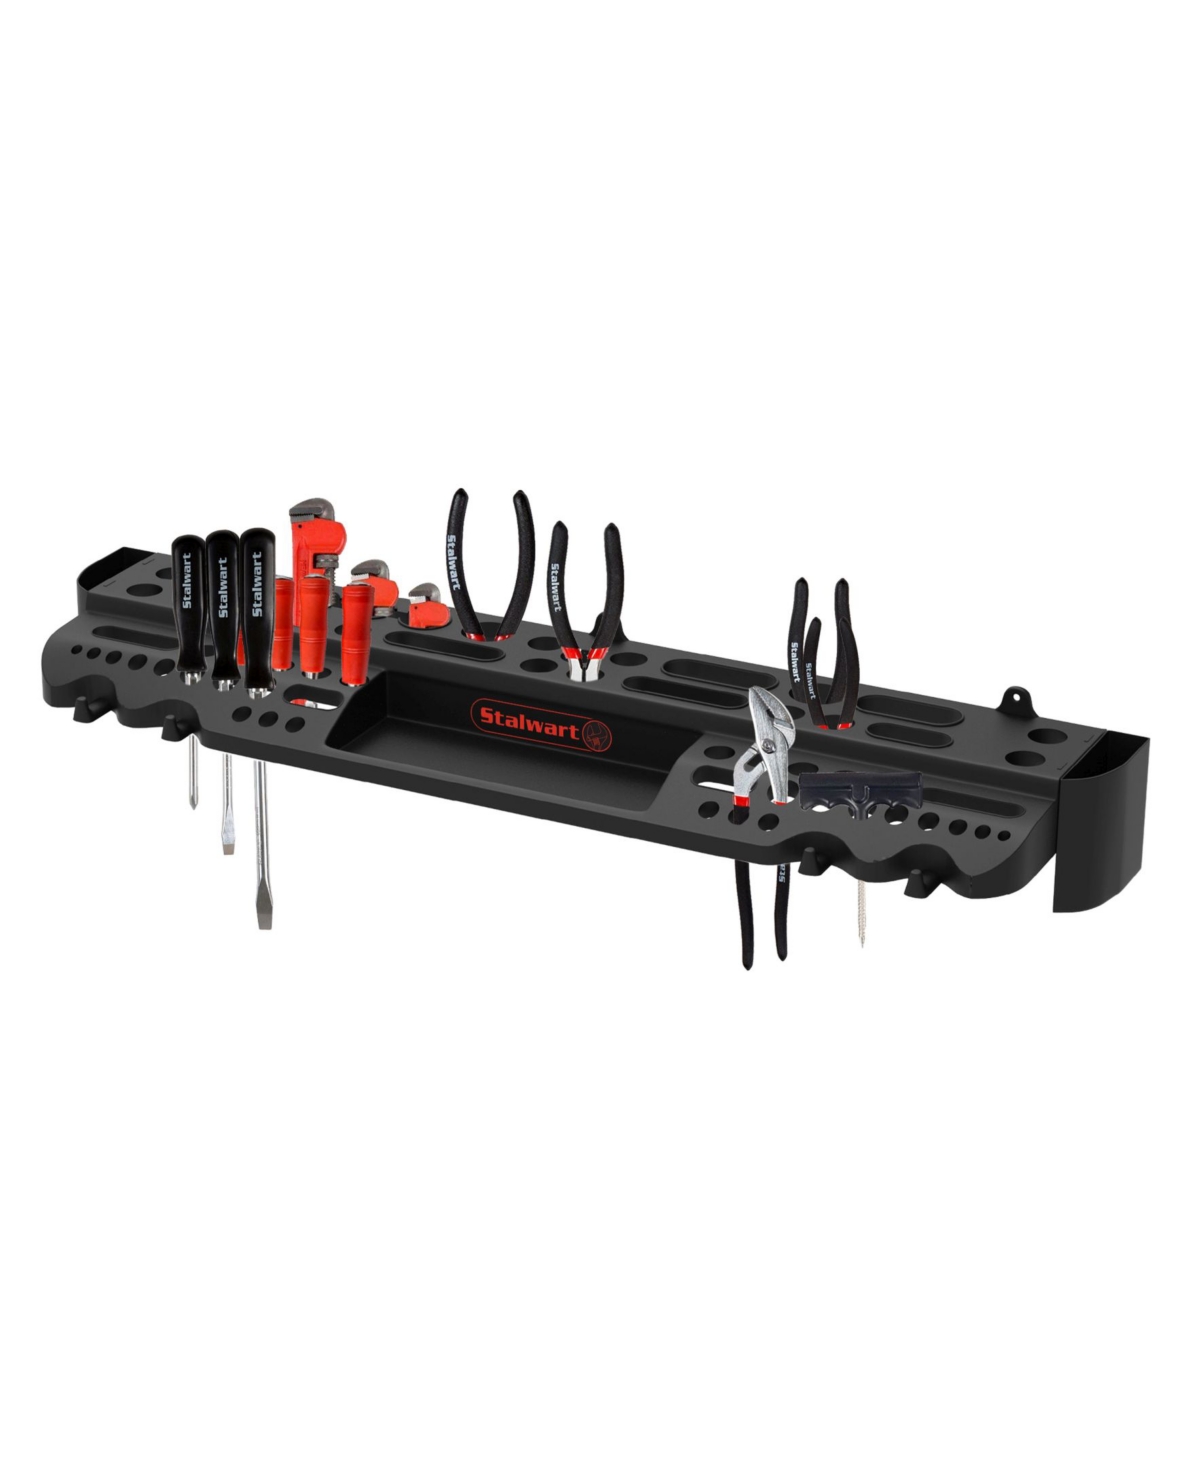 Wall Mountable Tool Storage Shelf for Garage, Shed or Work Shop Organization by Stalwart - Black